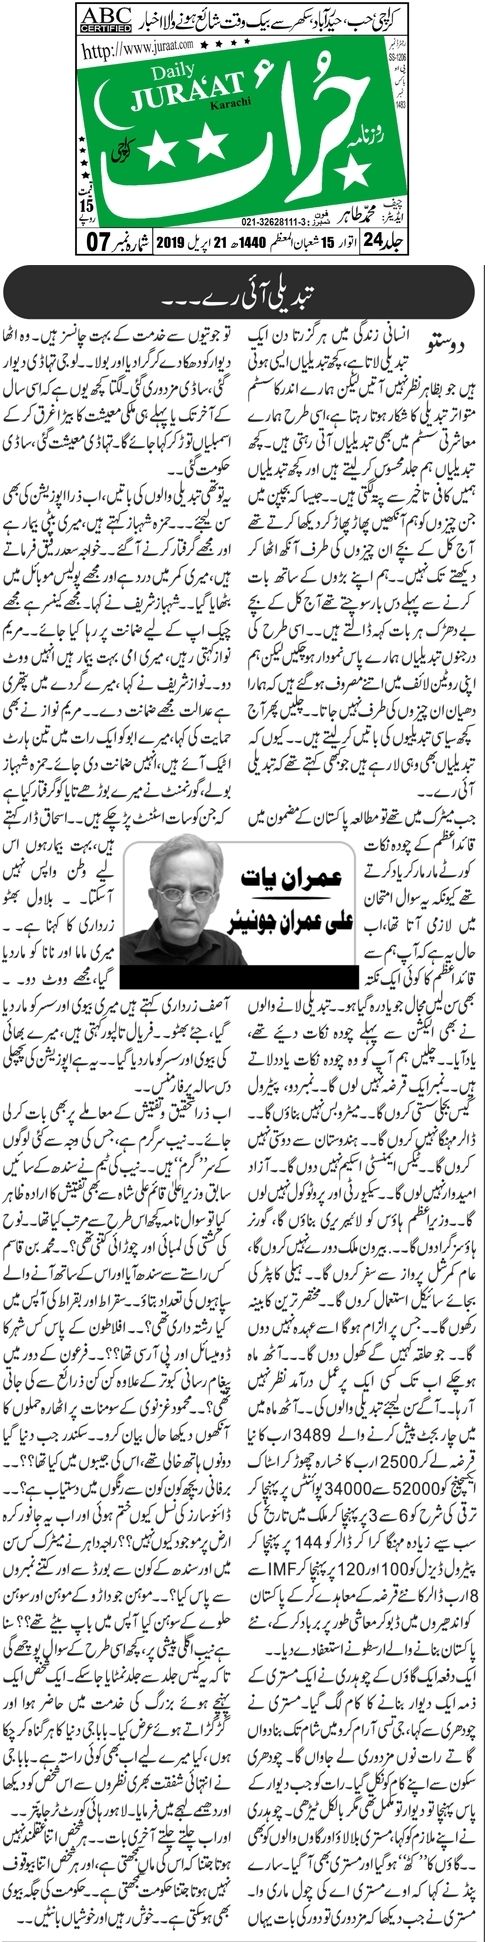 Tabdeeli aai rey by Ali Imran Junior Imran Yaat Daily Jurrat